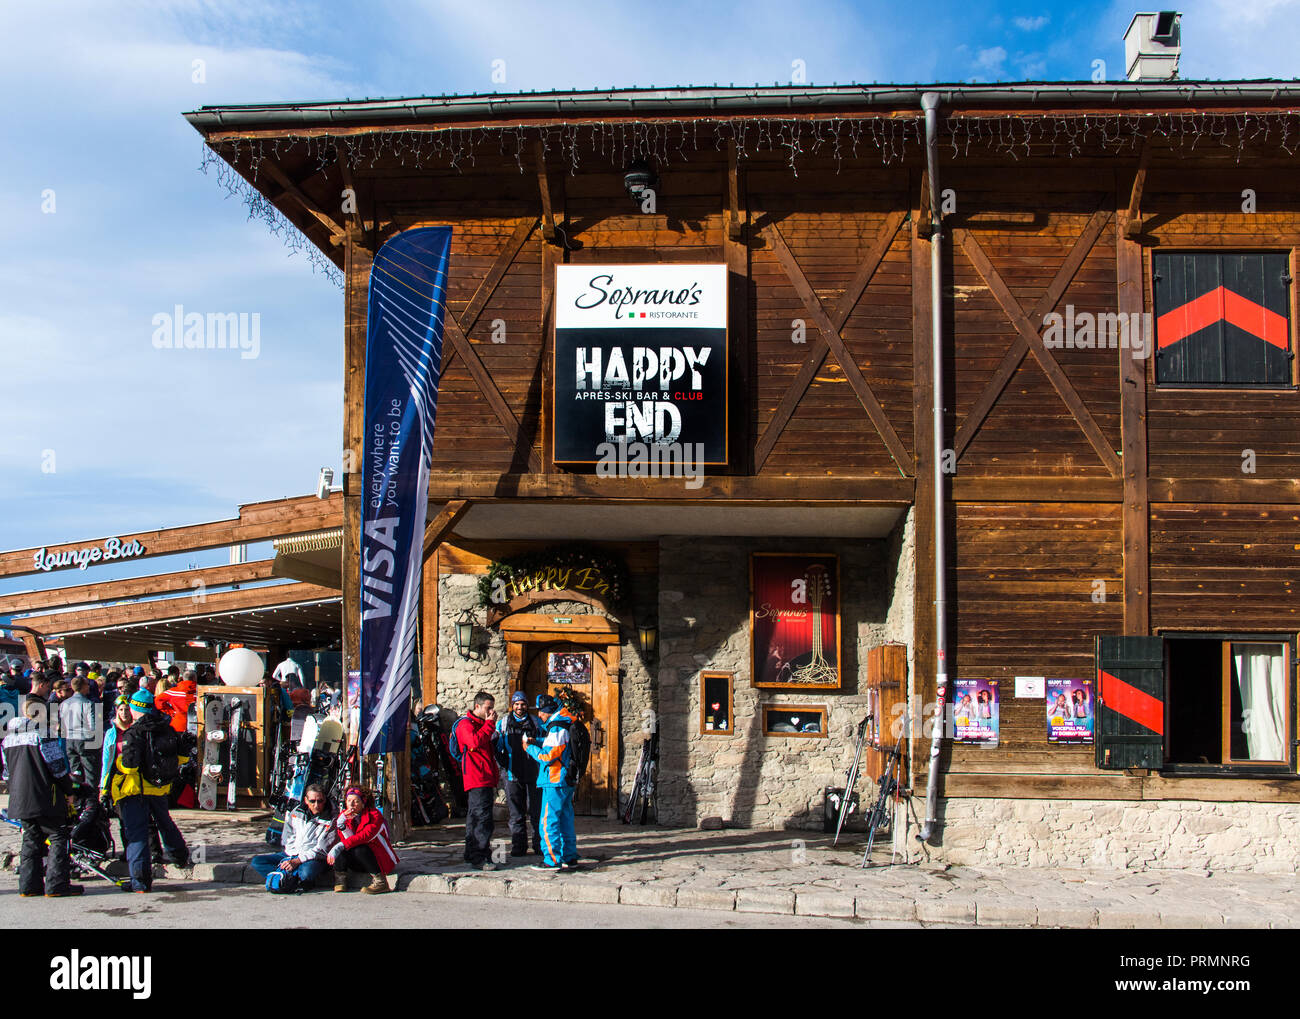 Apres Ski Bar High Resolution Stock Photography and Images - Alamy